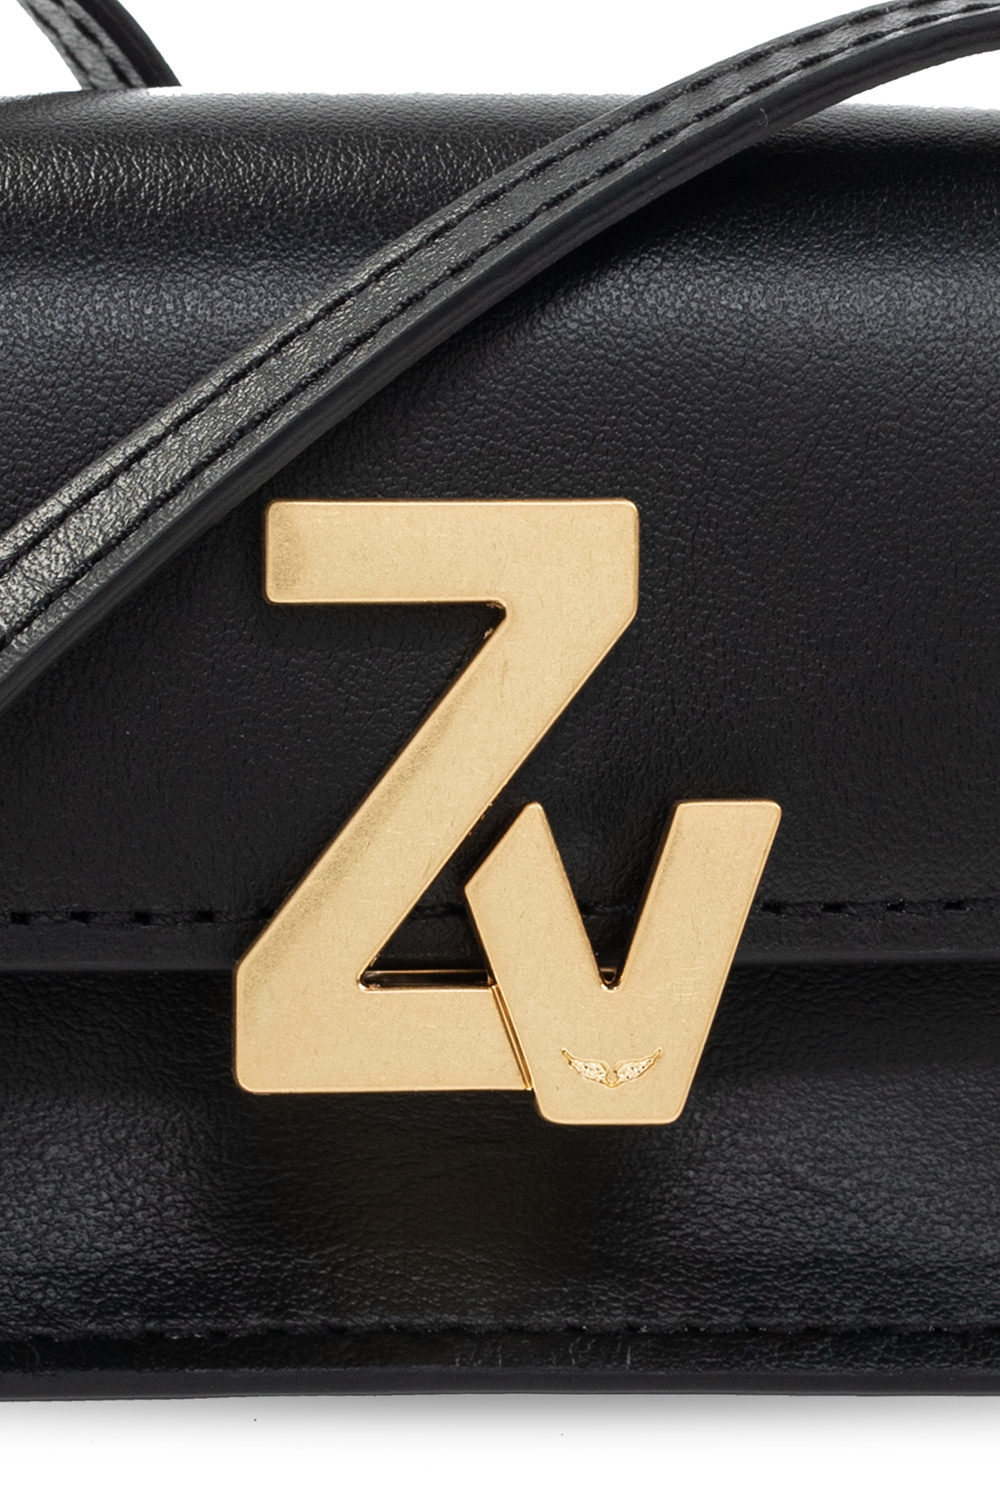 Zadig & Voltaire Initiale Belt Natur Noir, Leather Belt